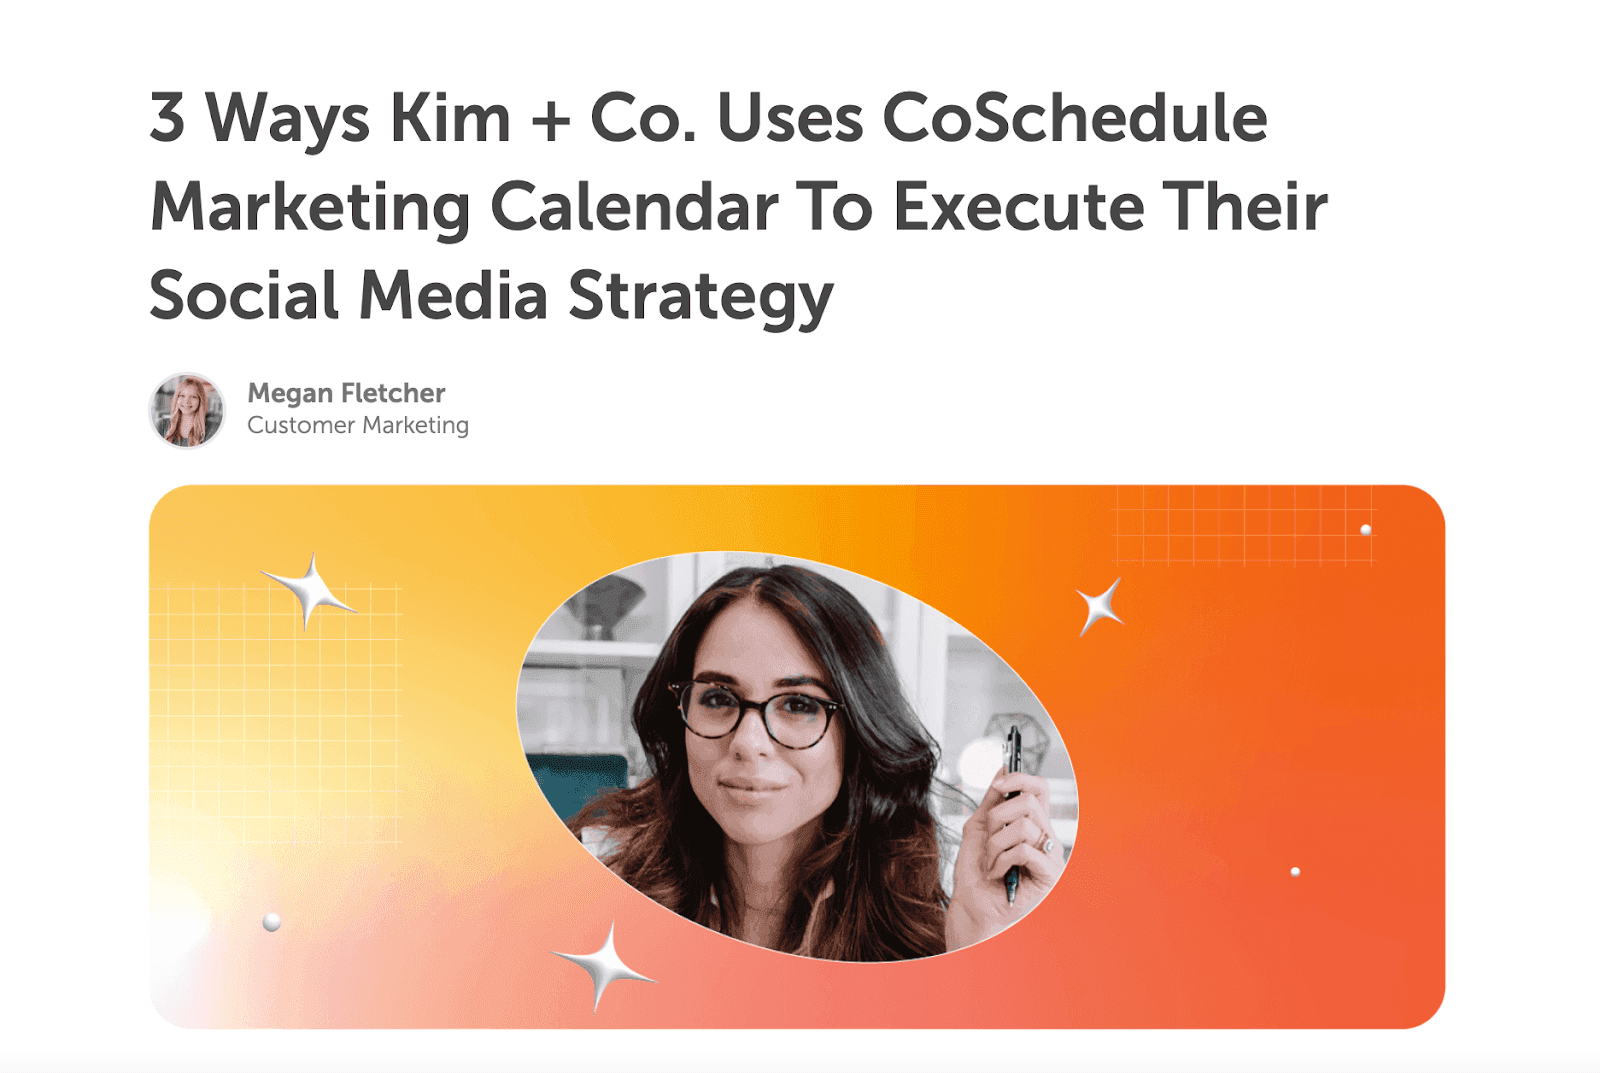 3 Ways Kim + Co. uses CoSchedule marketing calendar